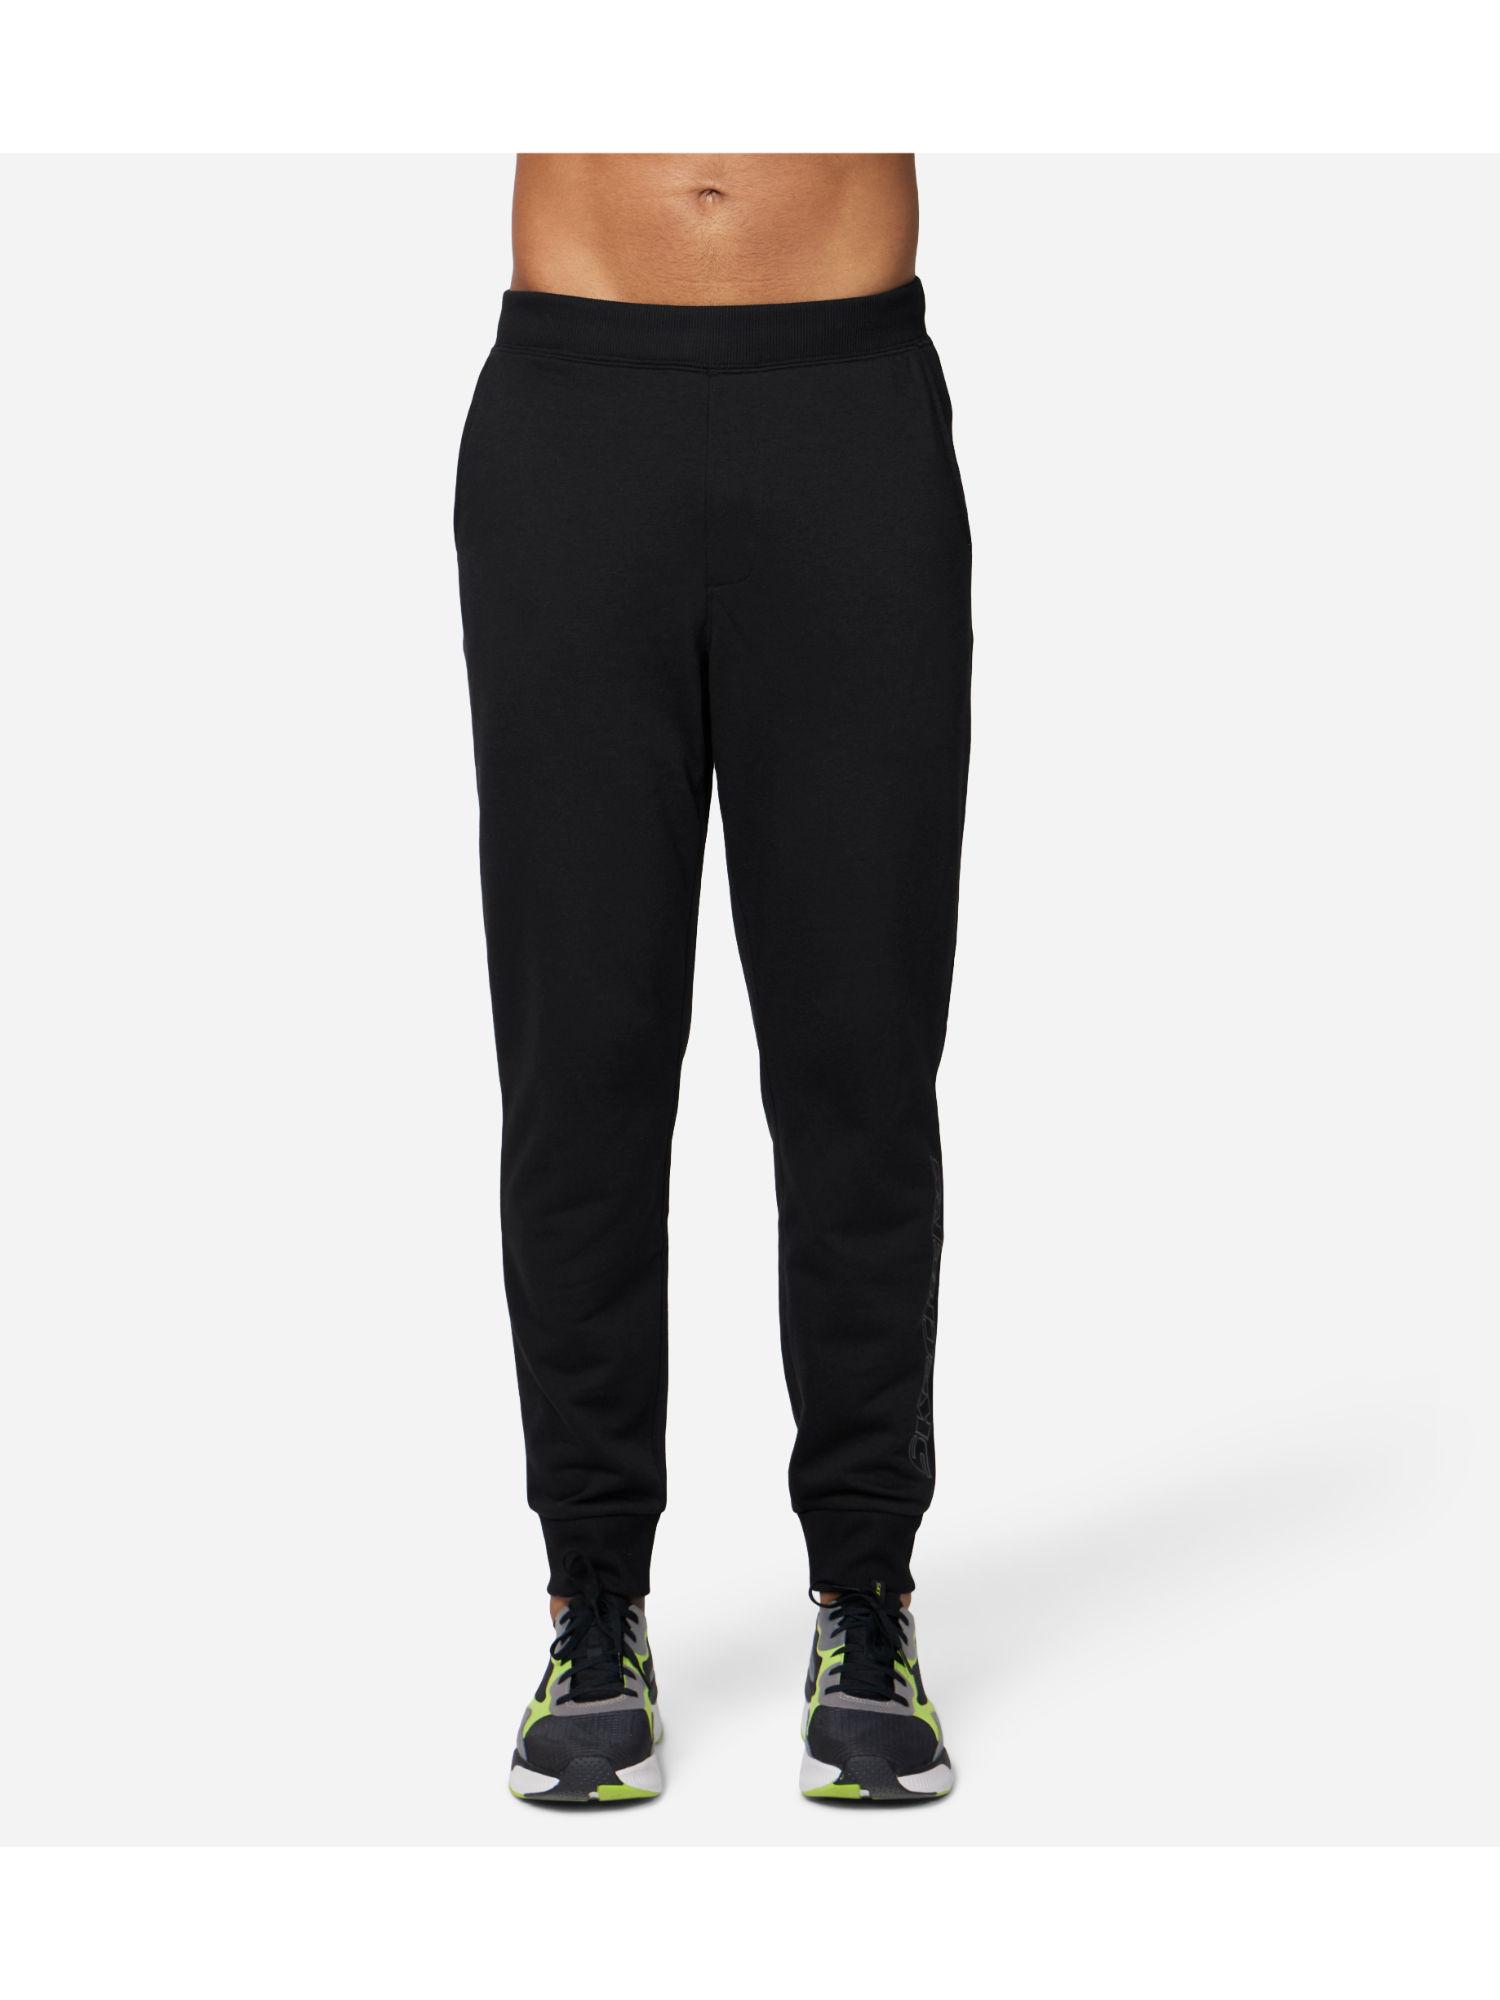 sweats-logo-jogger-black